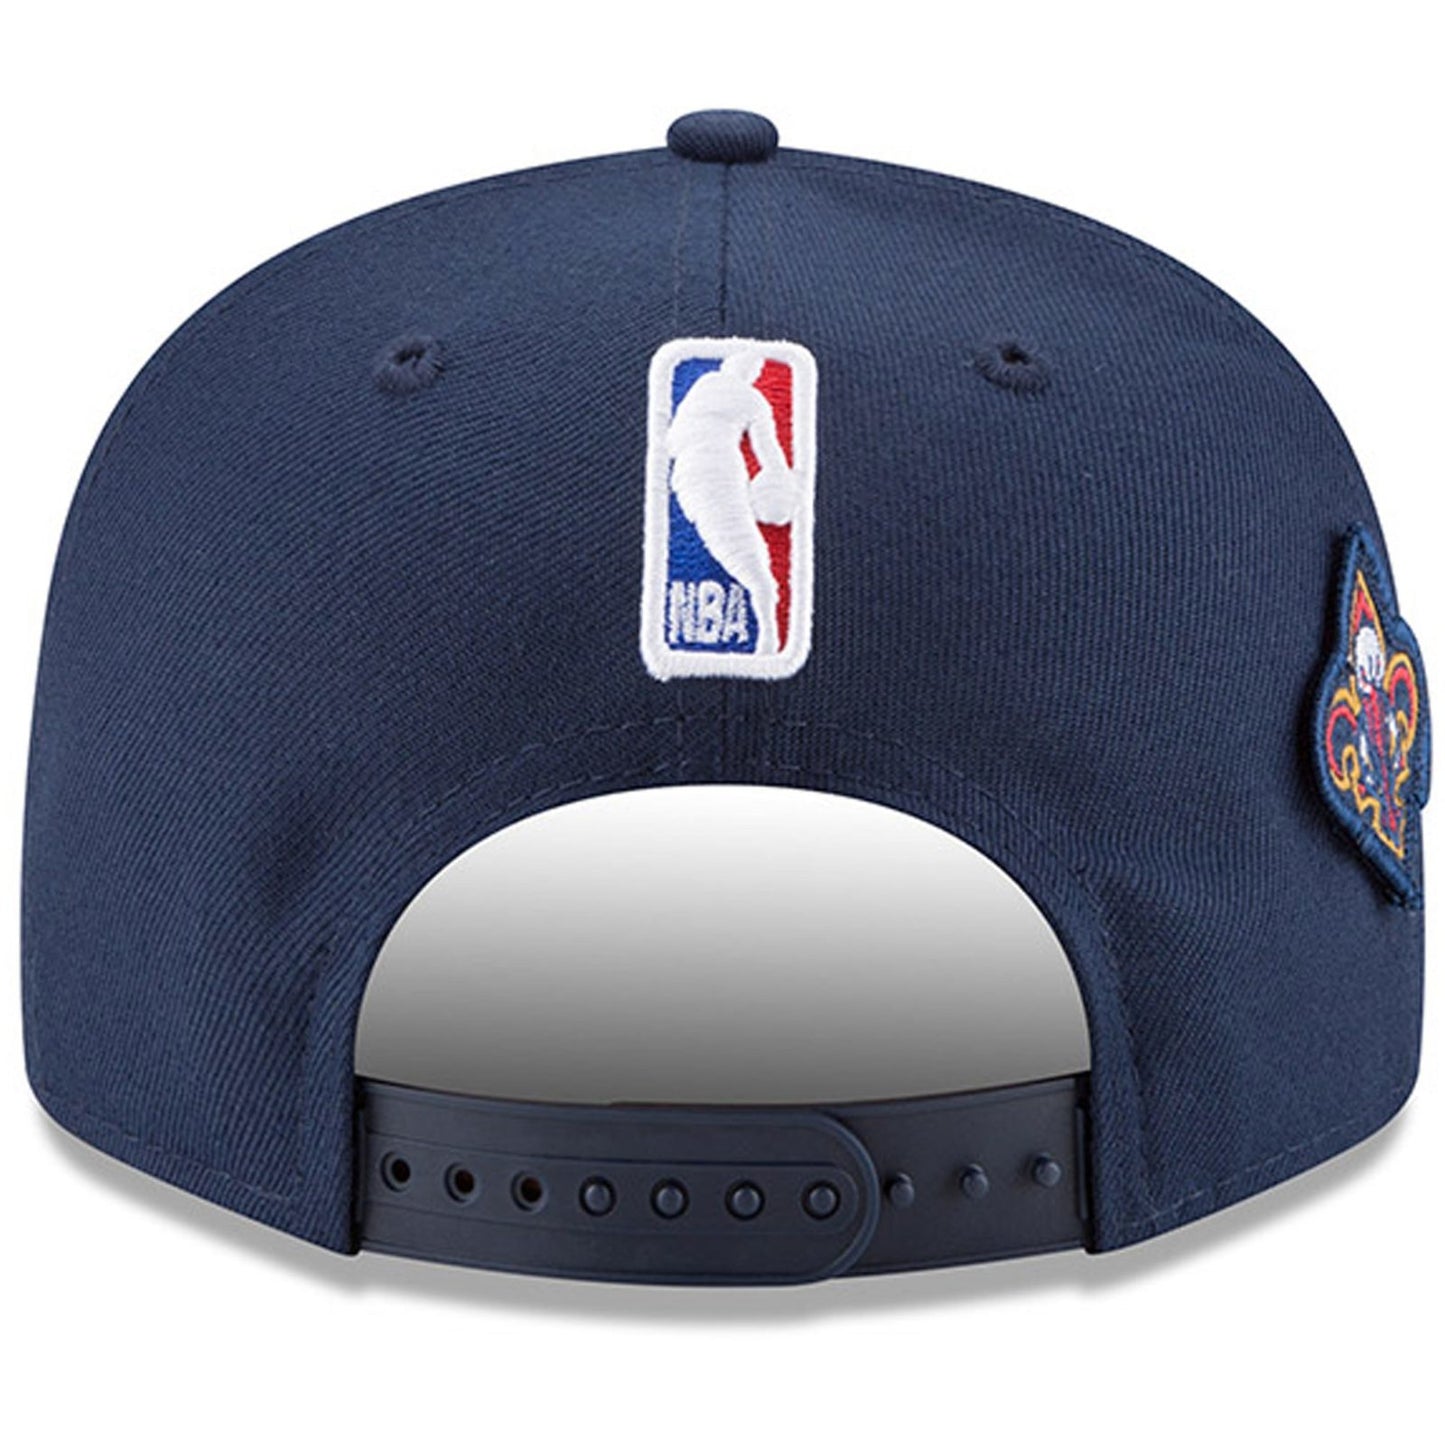 New Orleans Pelicans New Era 2018 Draft 9FIFTY Snapback Adjustable Hat – Navy